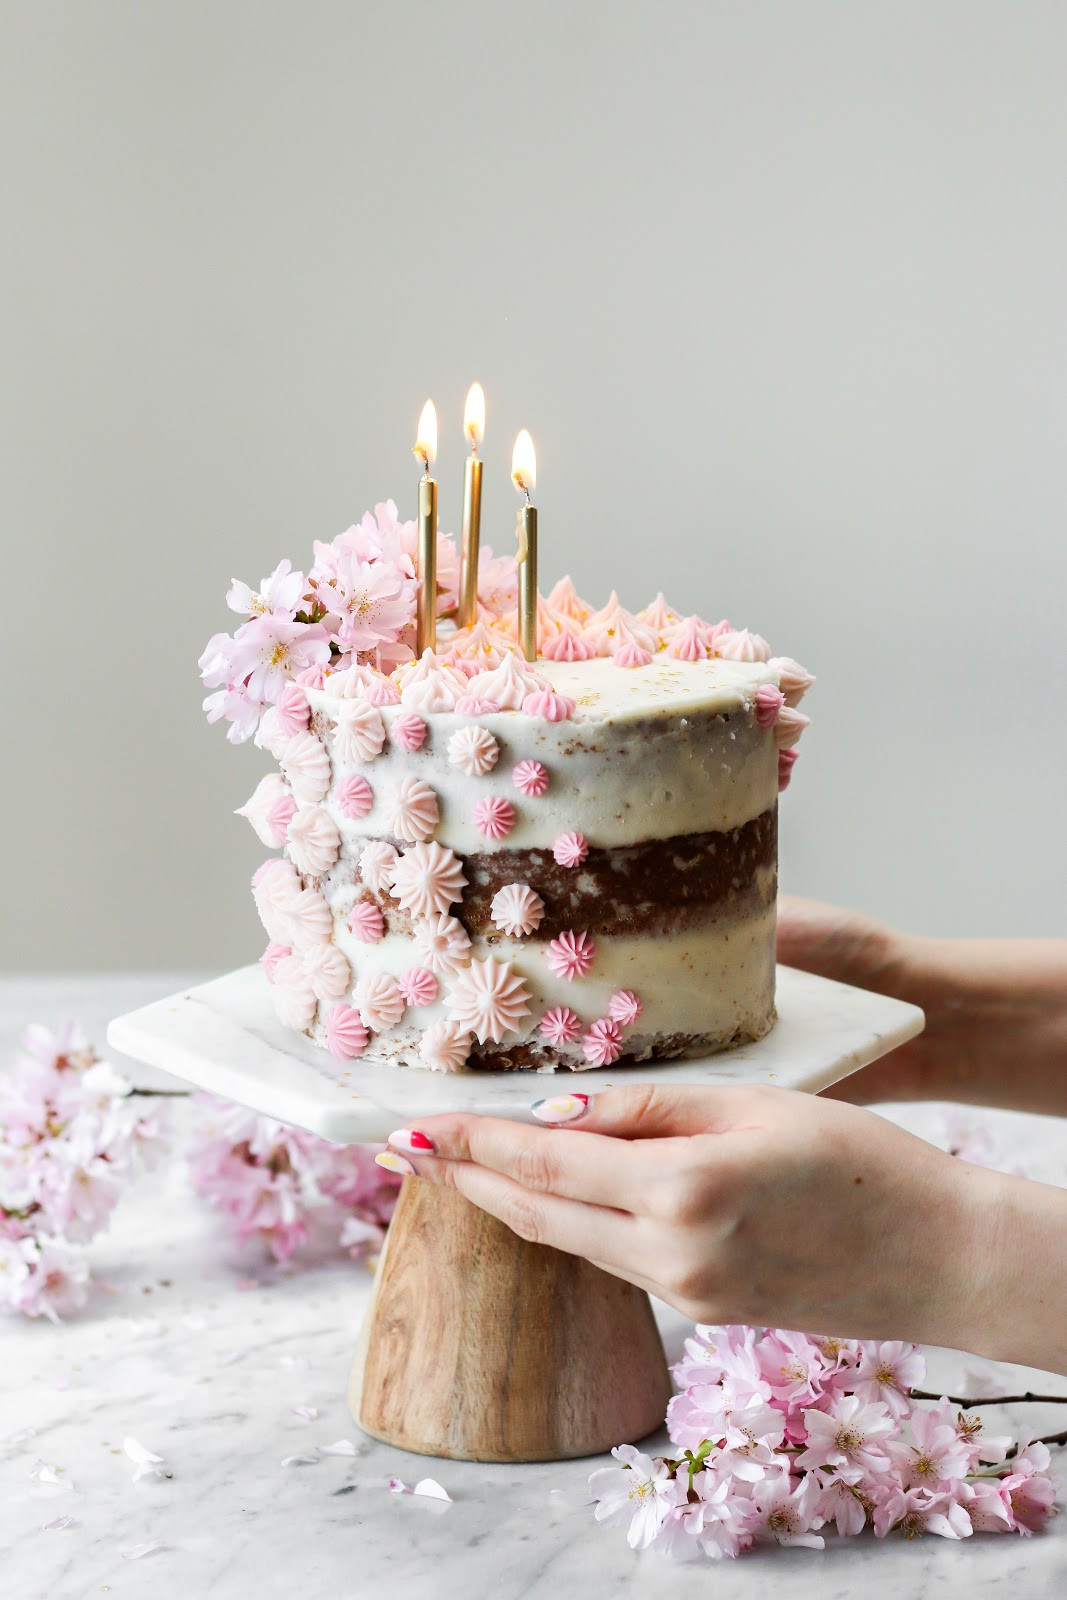 Best ideas about Peanut Butter Birthday Cake
. Save or Pin Peanut Butter and Jelly Birthday Cake Now.